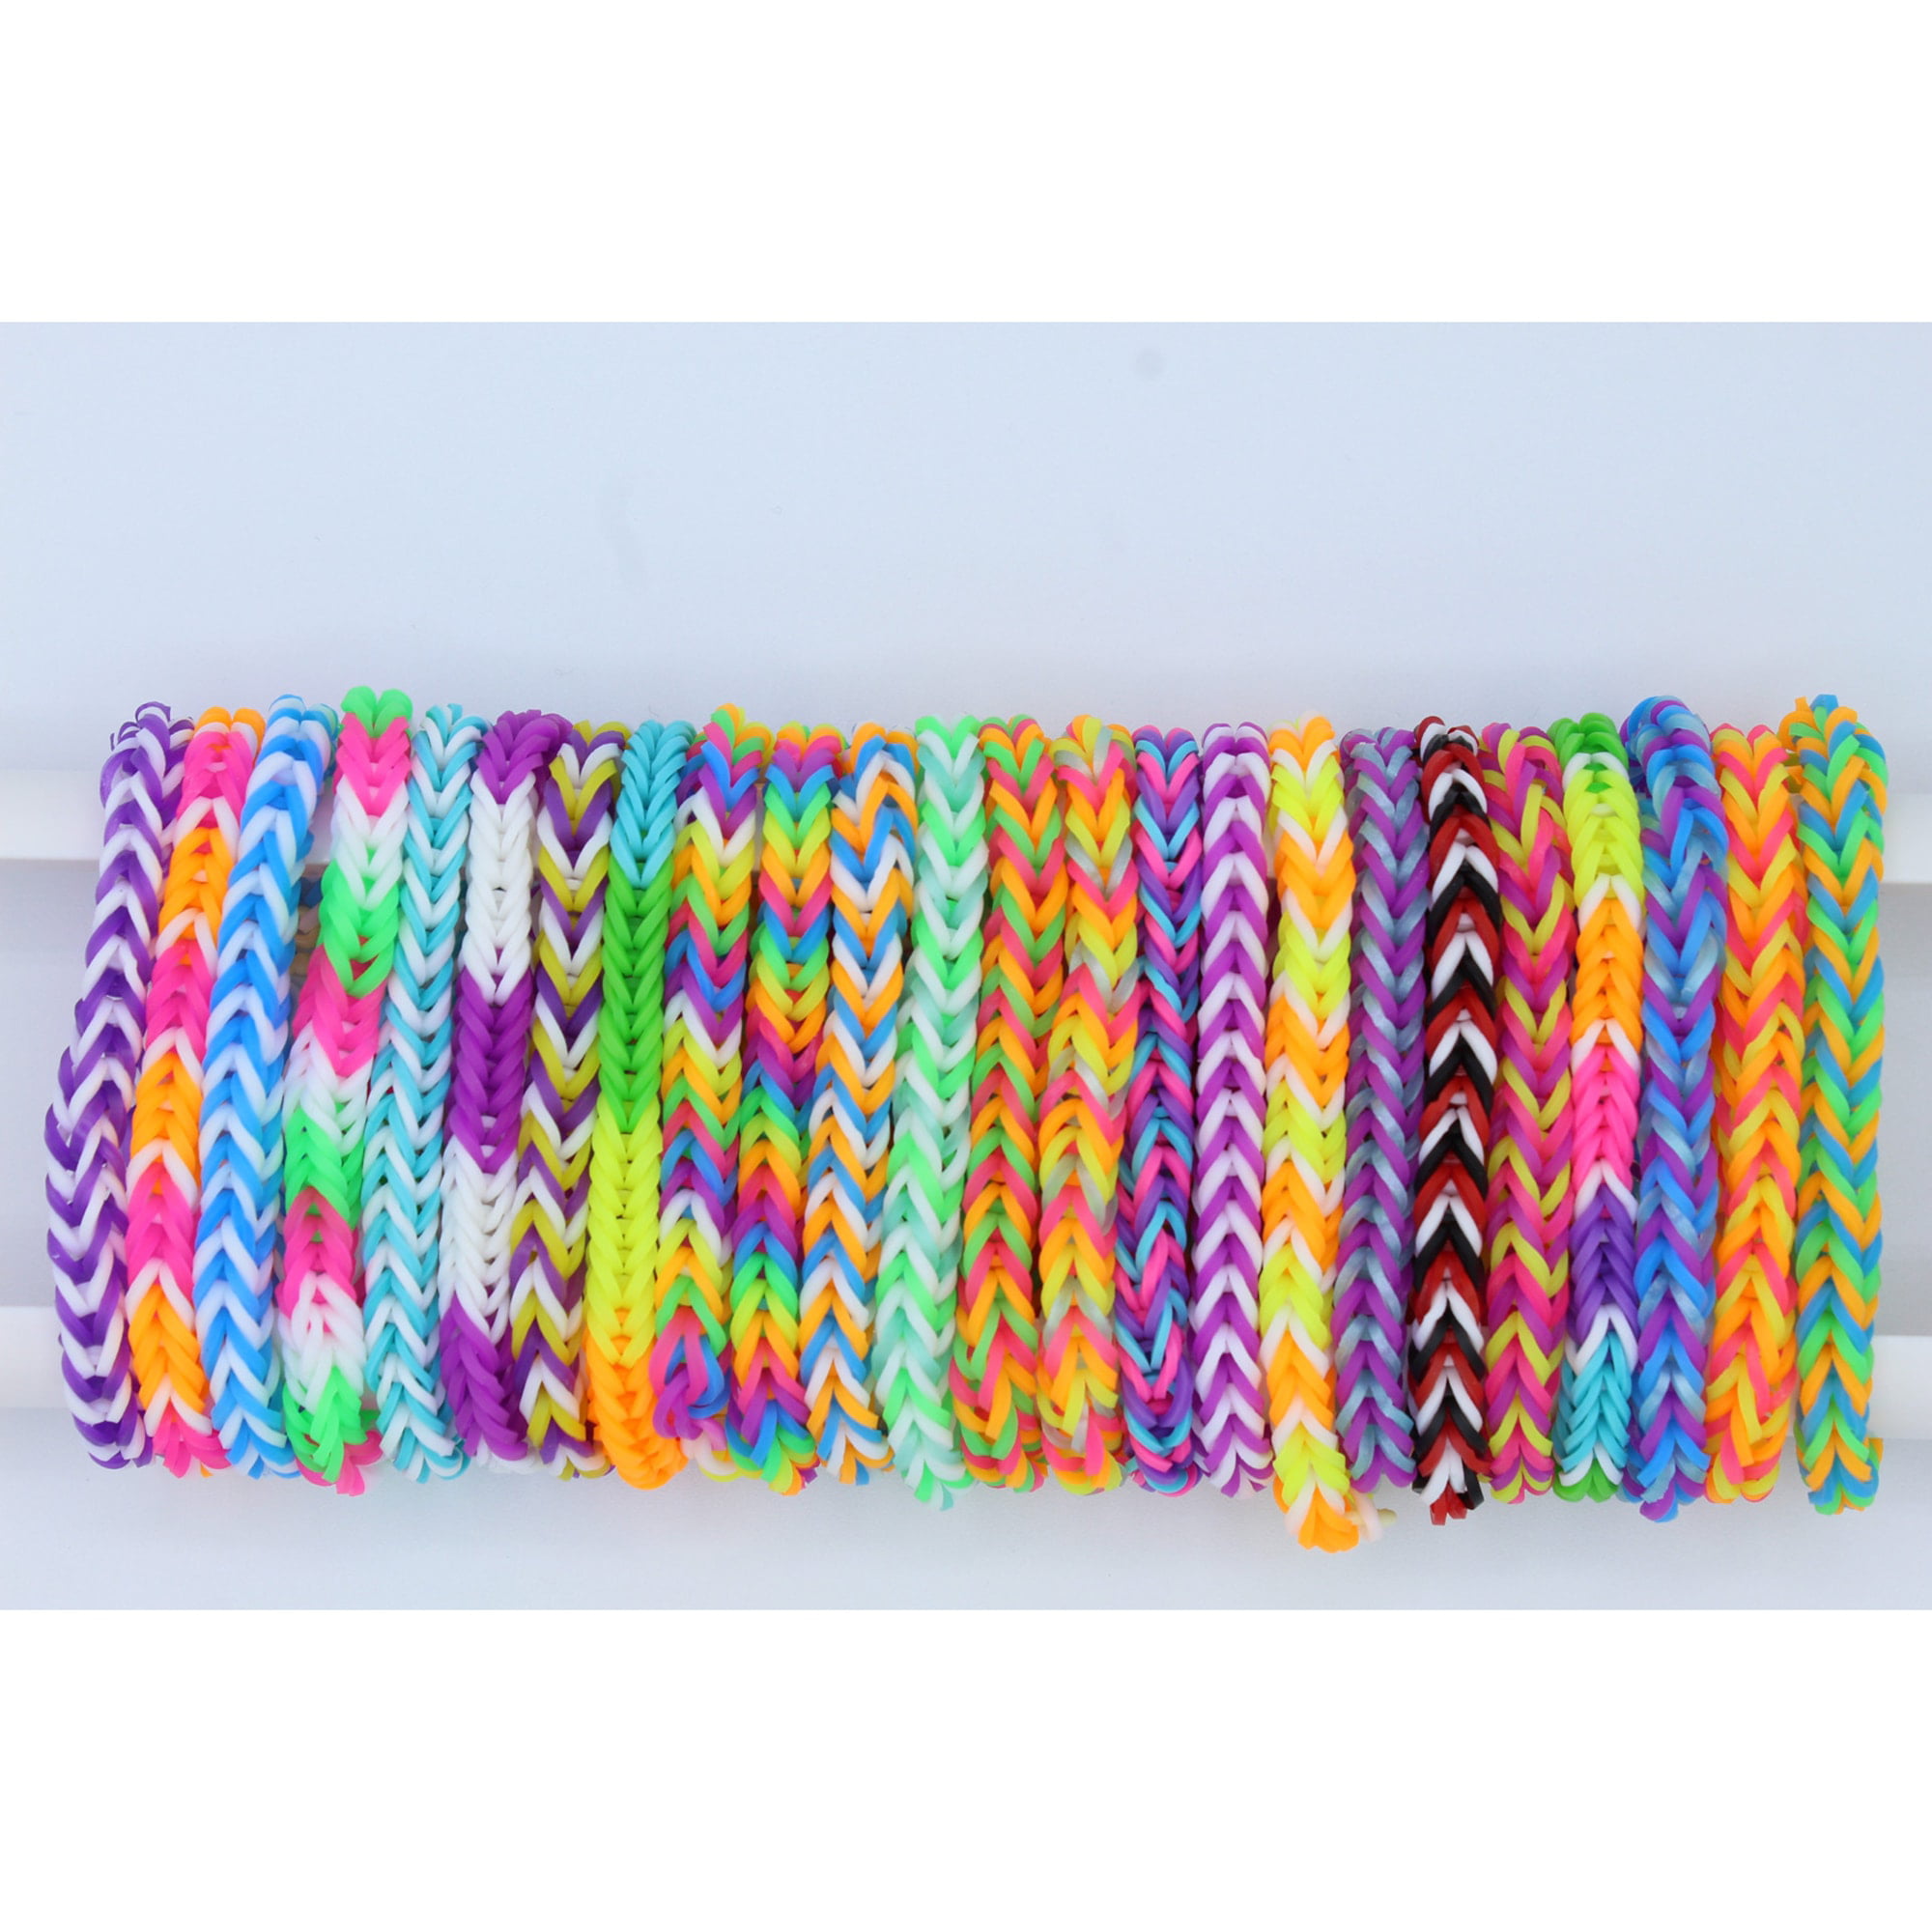 Aggregate more than 82 custom rainbow bracelets super hot - POPPY